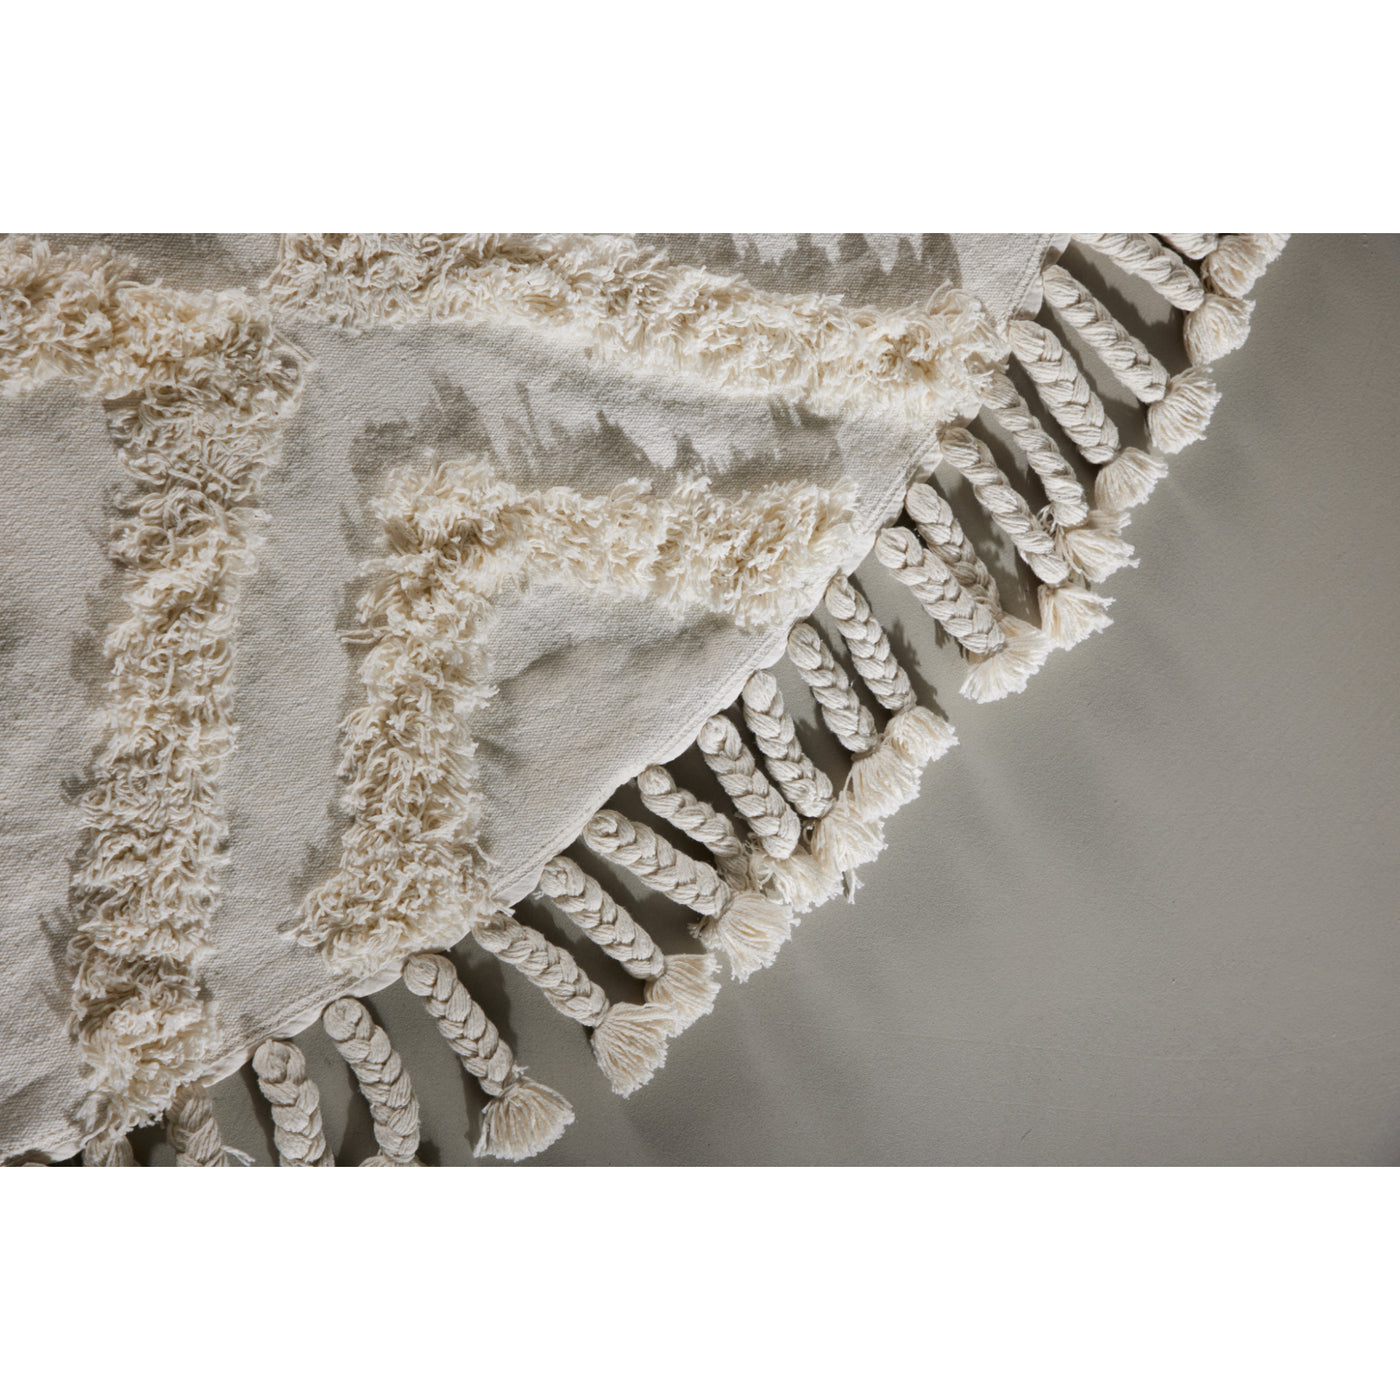 Iwalani-Baumwolle – 200 x 200 – rund – weiß